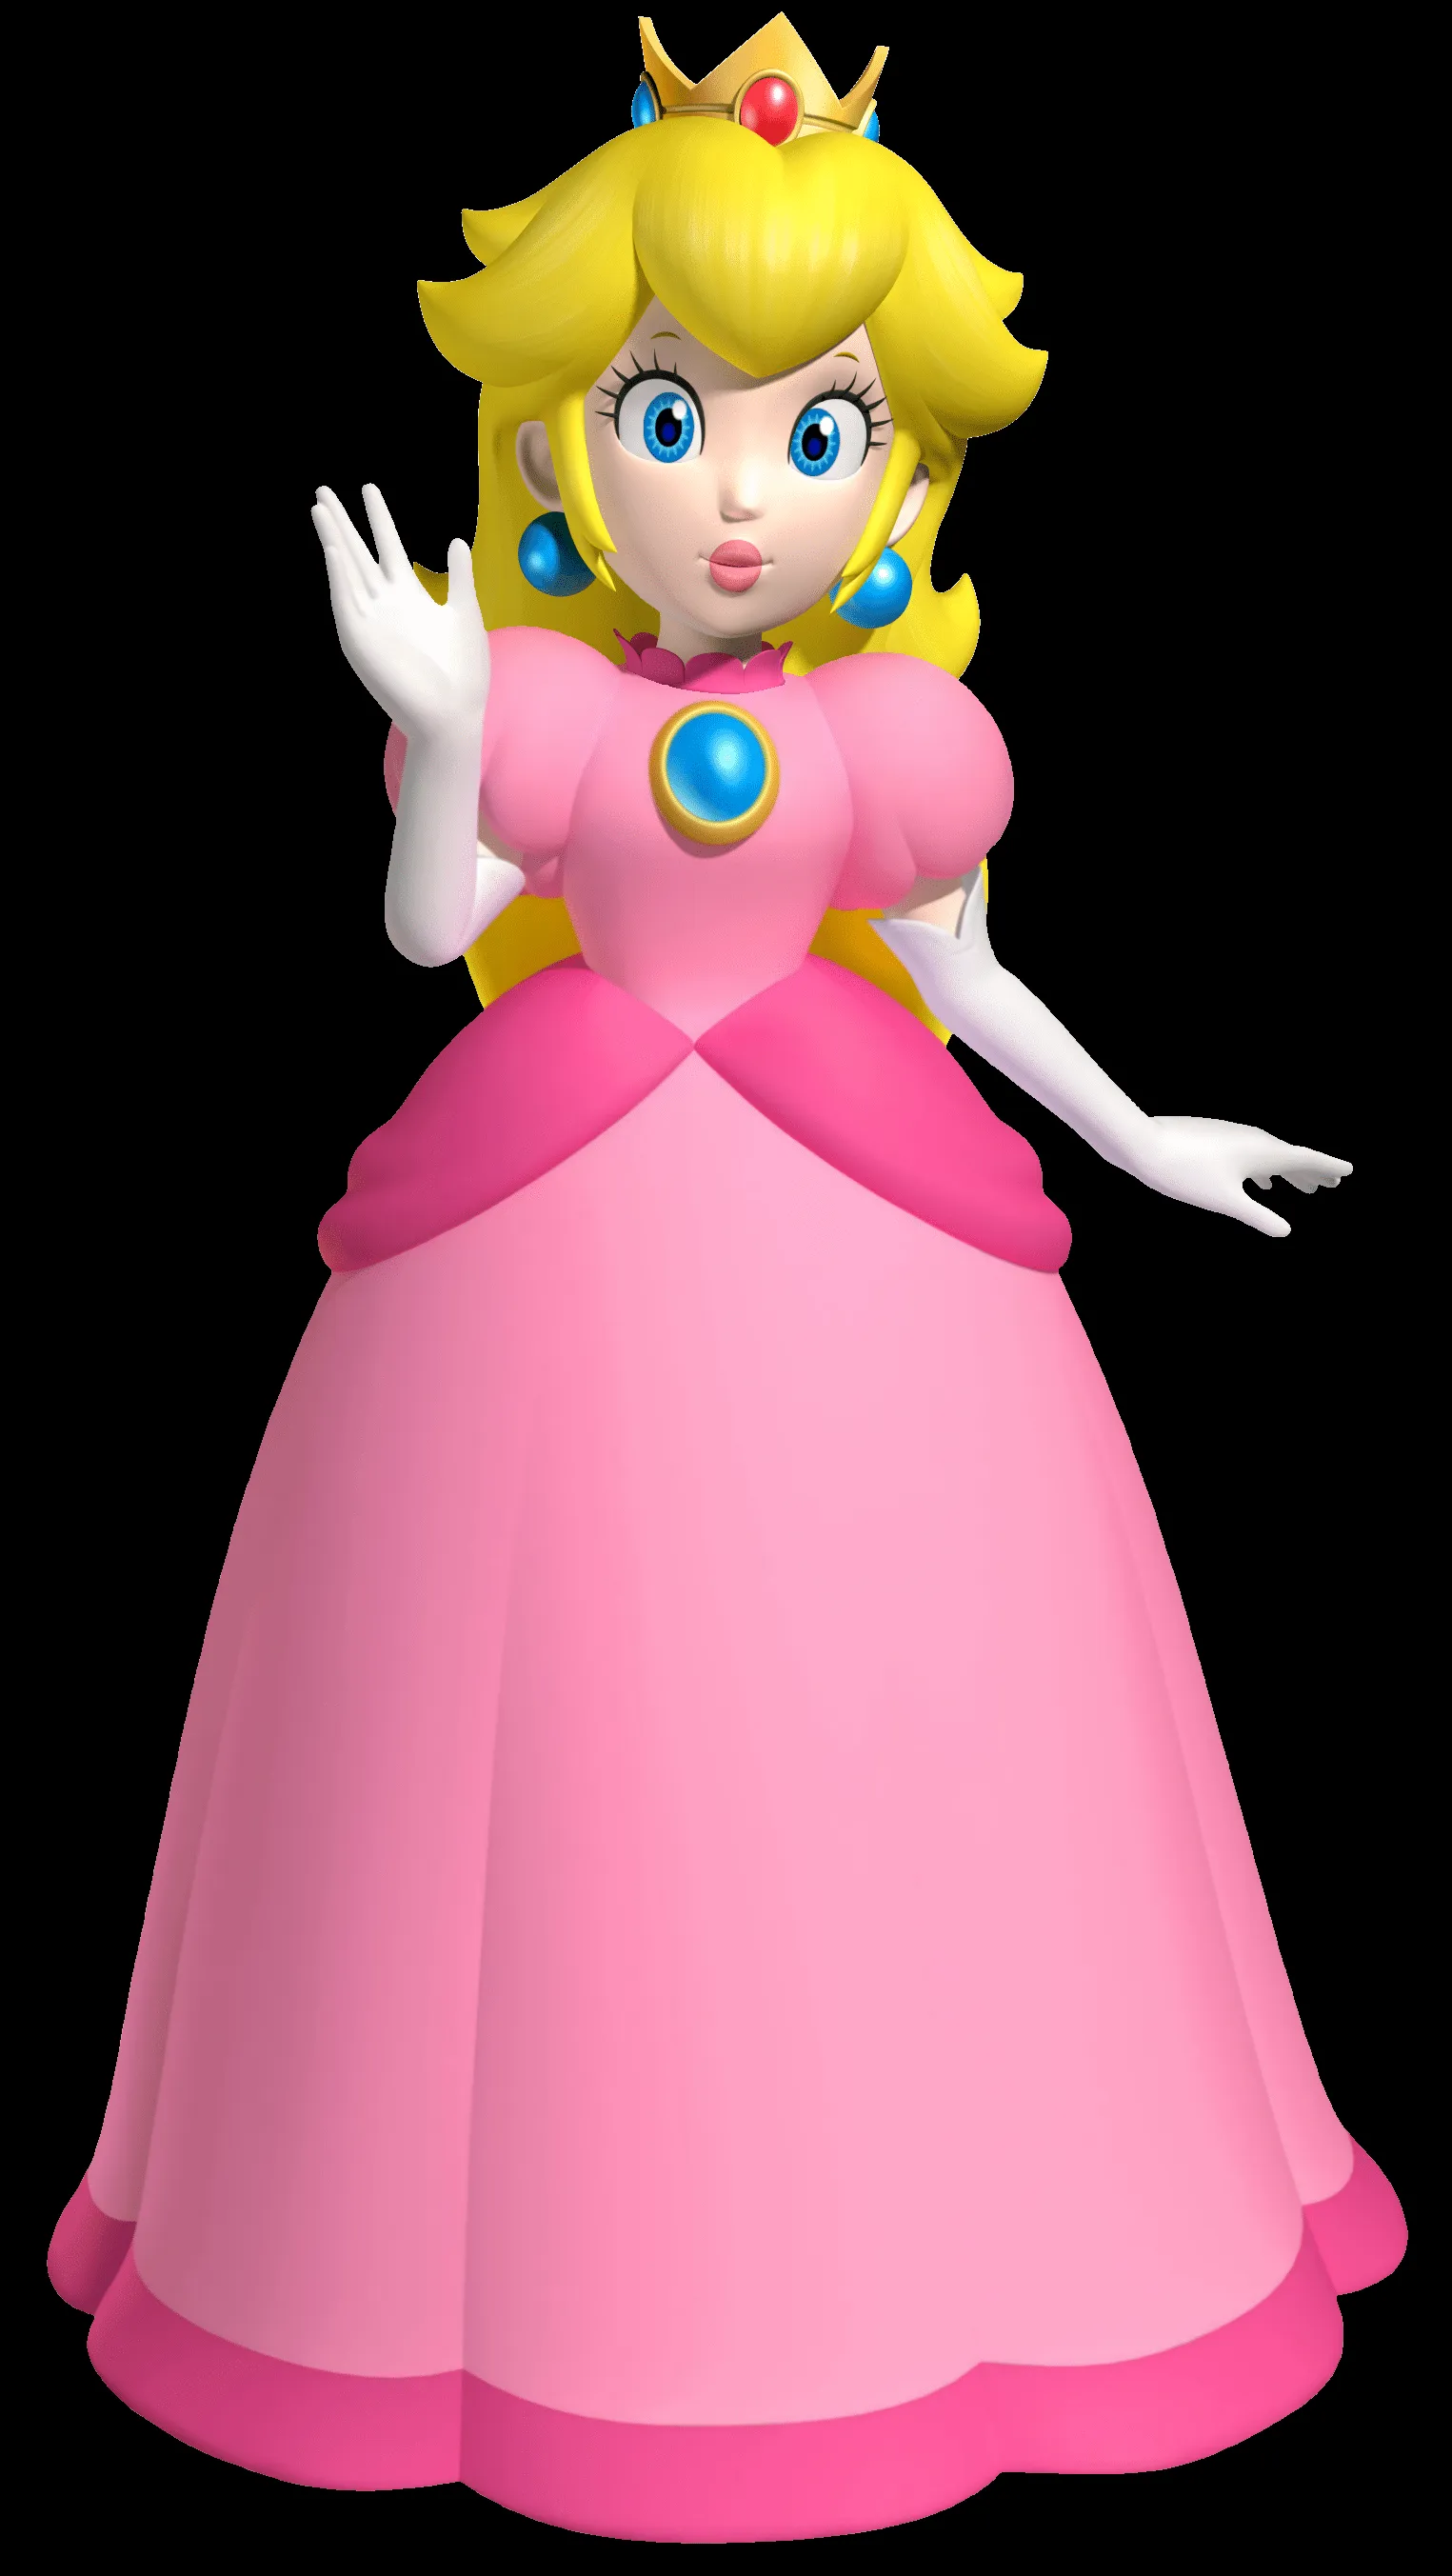 Image - Princess Peach SM3DW.png - Fantendo, the Nintendo Fanon ...